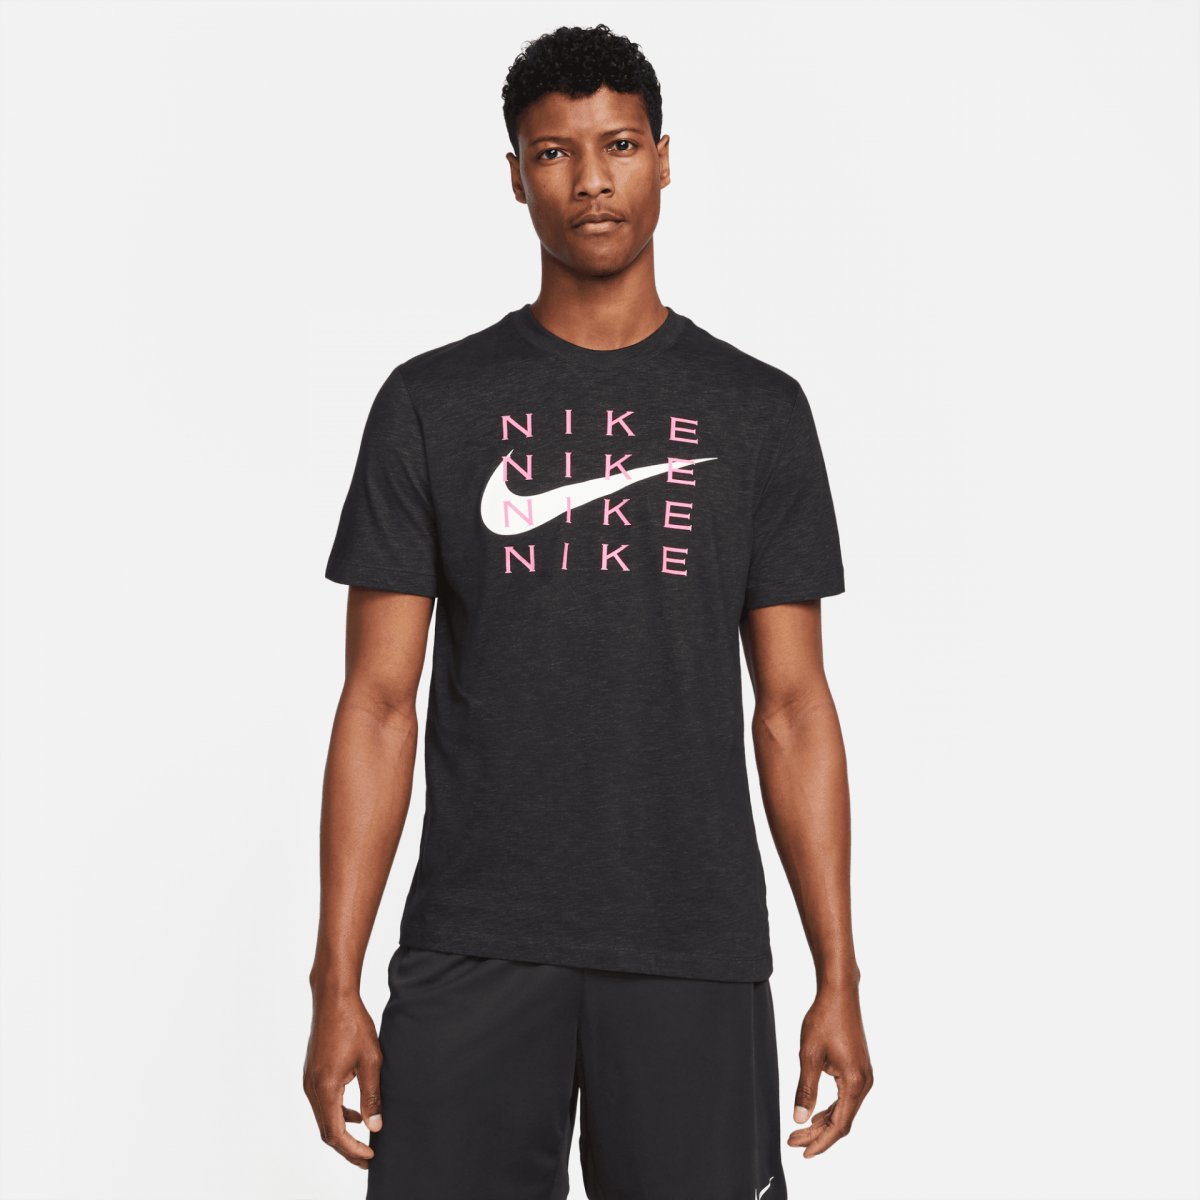 Nike Dri-FIT Black Men's training tee - Tshirts - Clothes - Men - Forpro